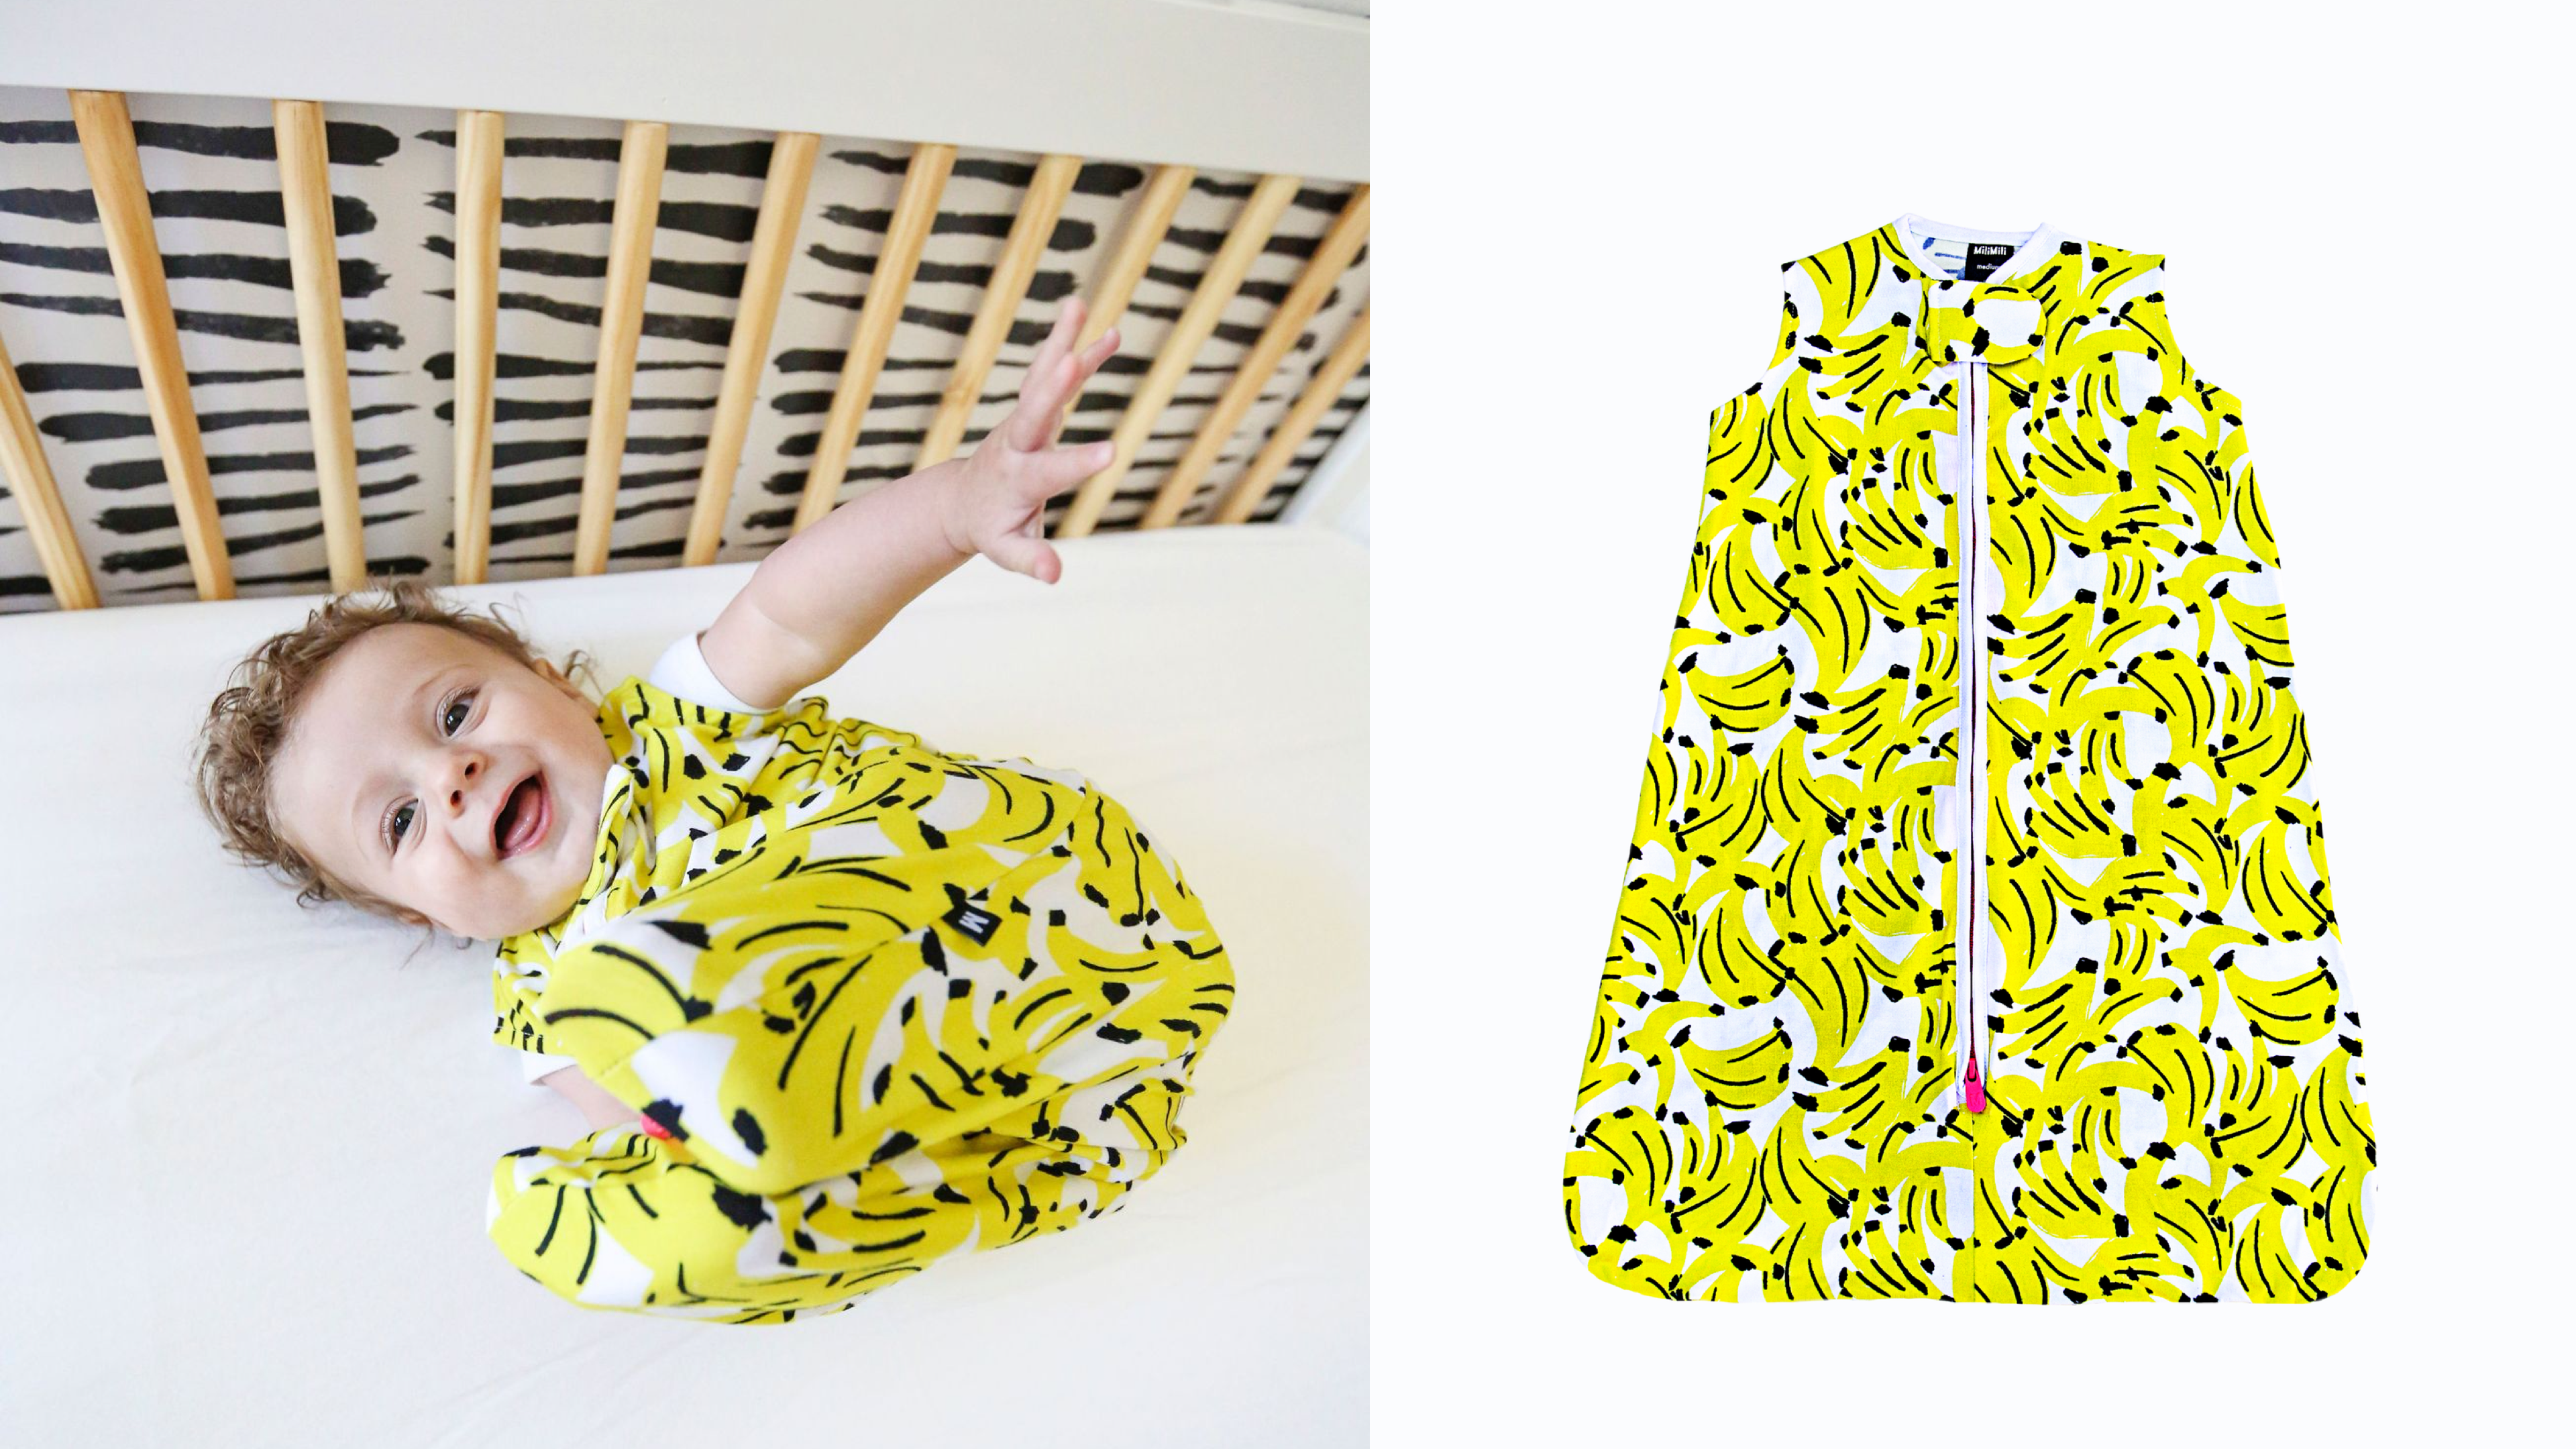 soft fabric sleep sack for babies with an adorable yellow banana pattern